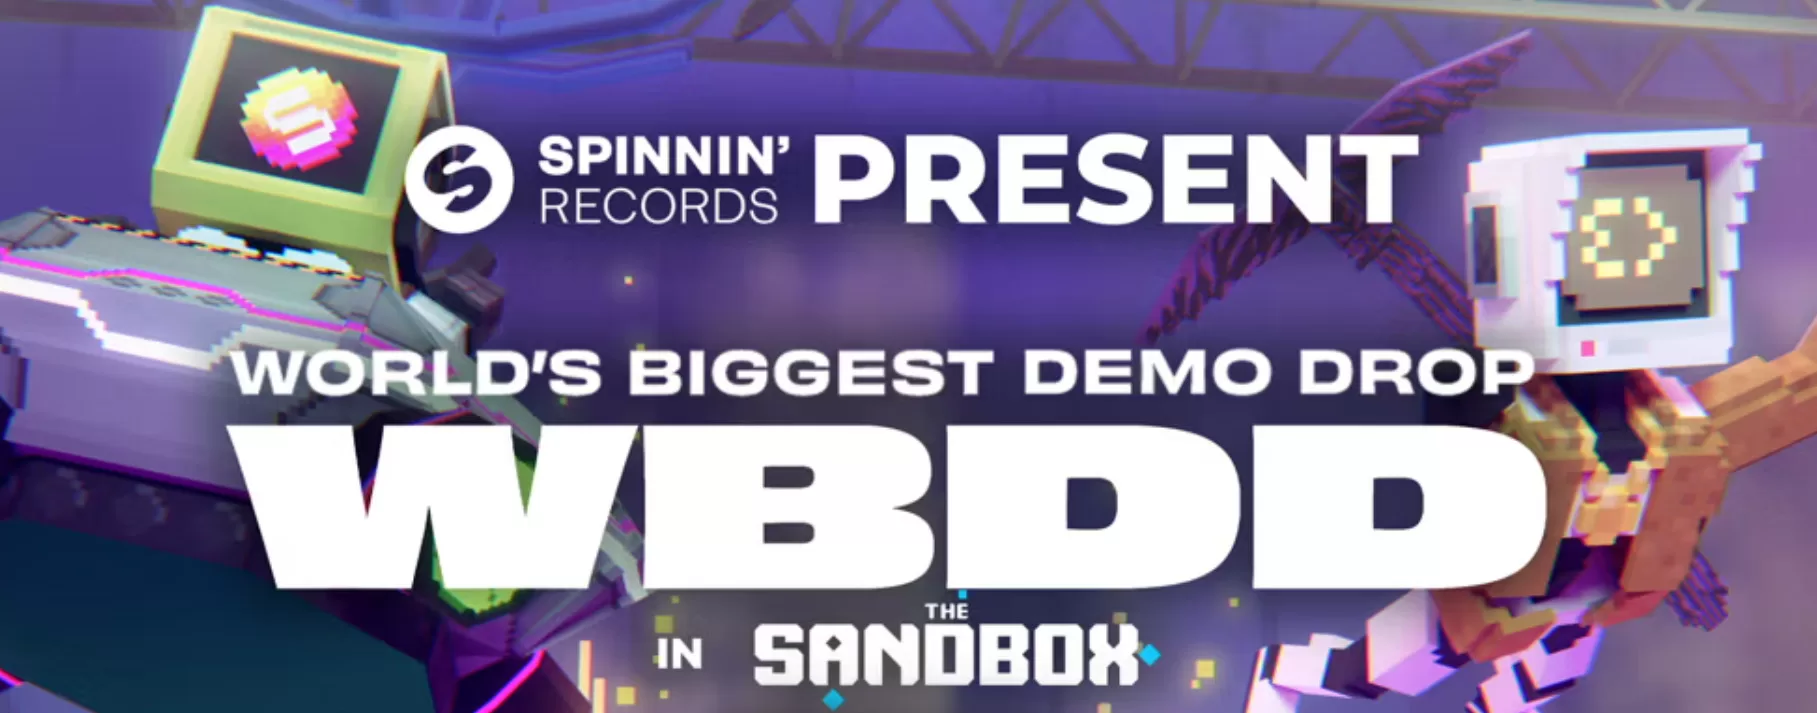 The Sandbox Launches WBDD